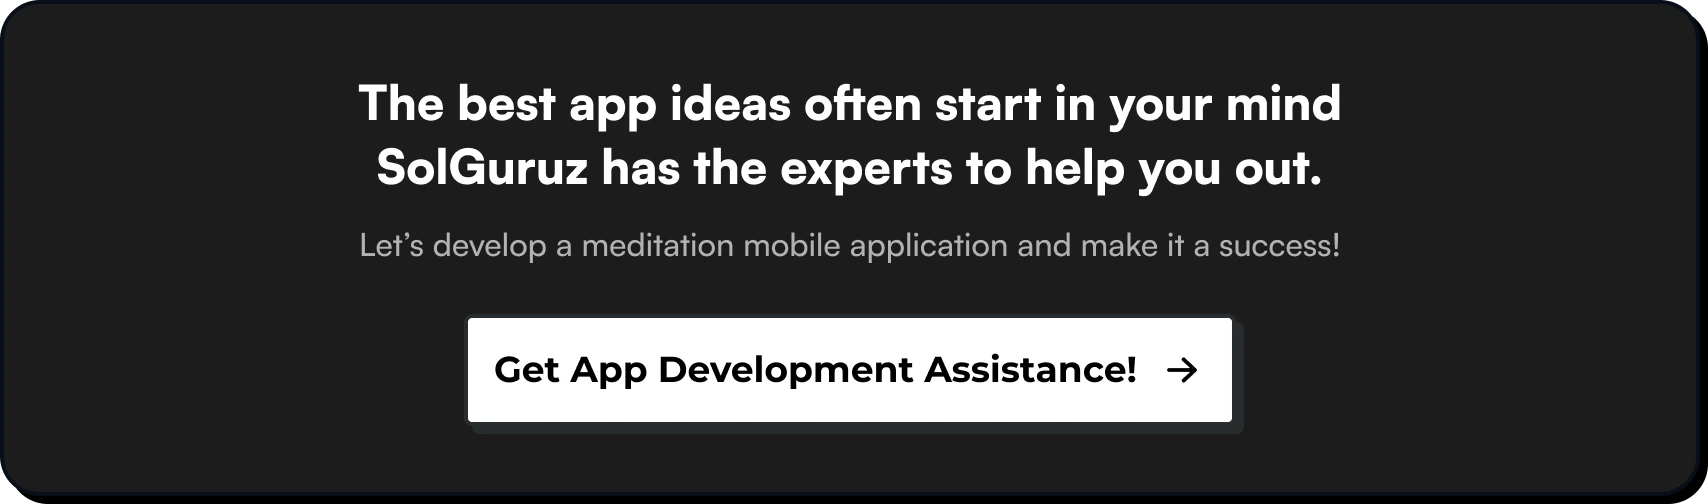 Let’s develop a meditation mobile application and make it a success